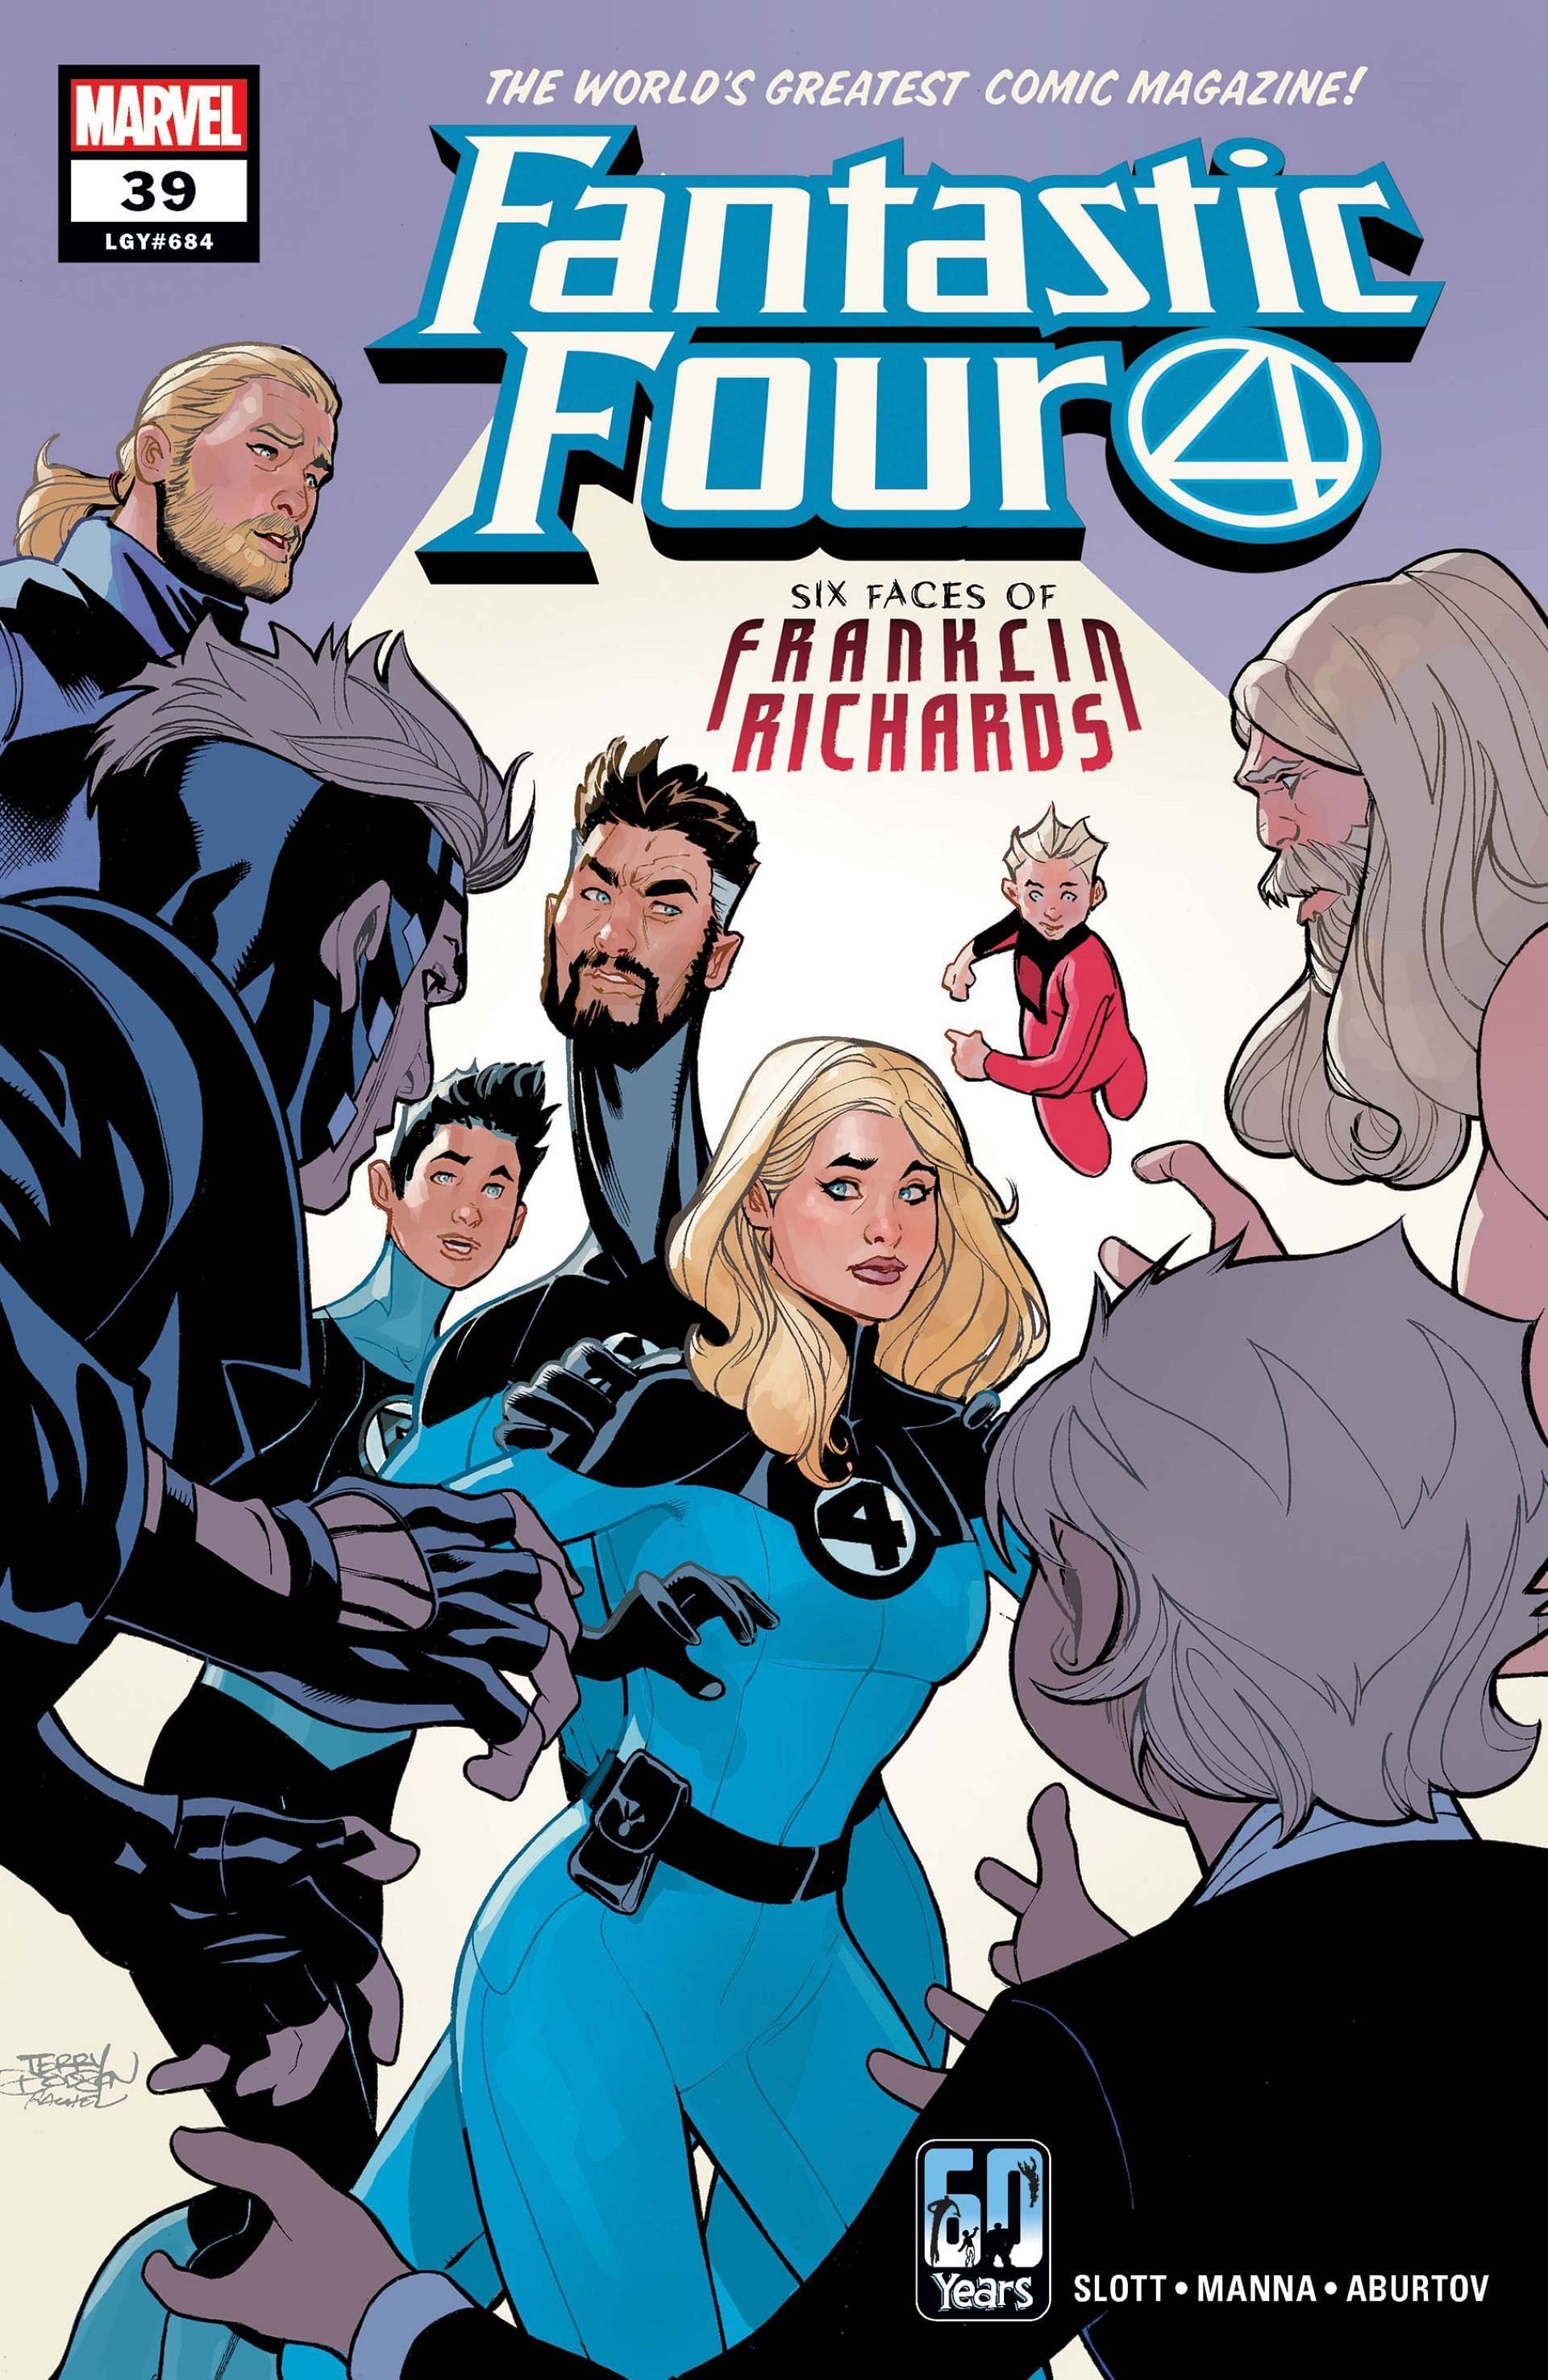 Fantastic Four #39 is written by Dan Slott (Image via Marvel)